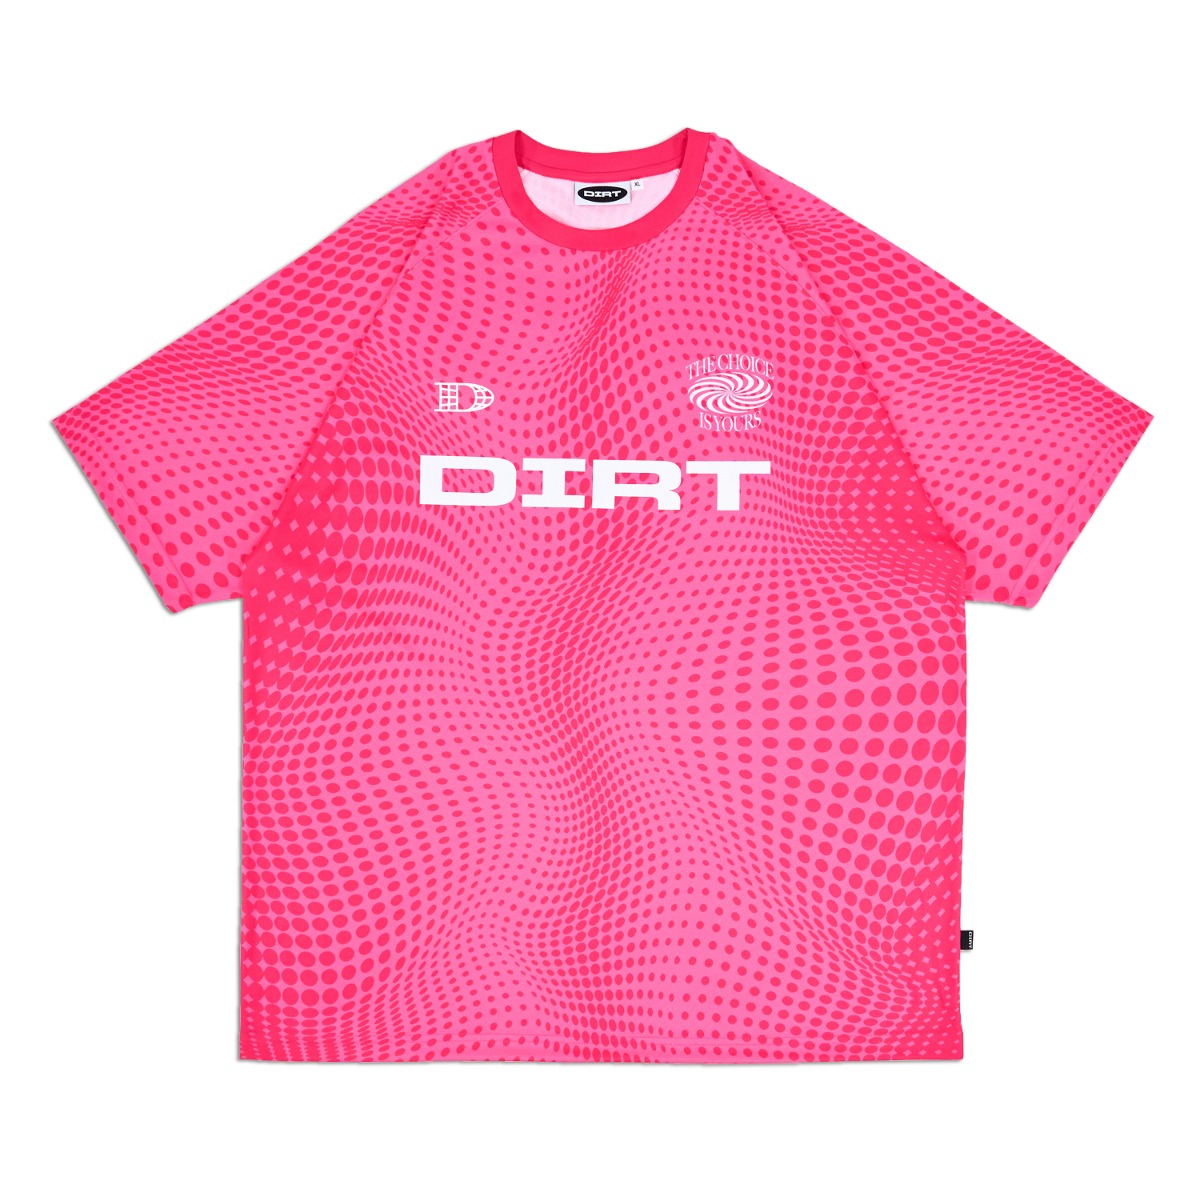 Dot Spin Jersey / Pink